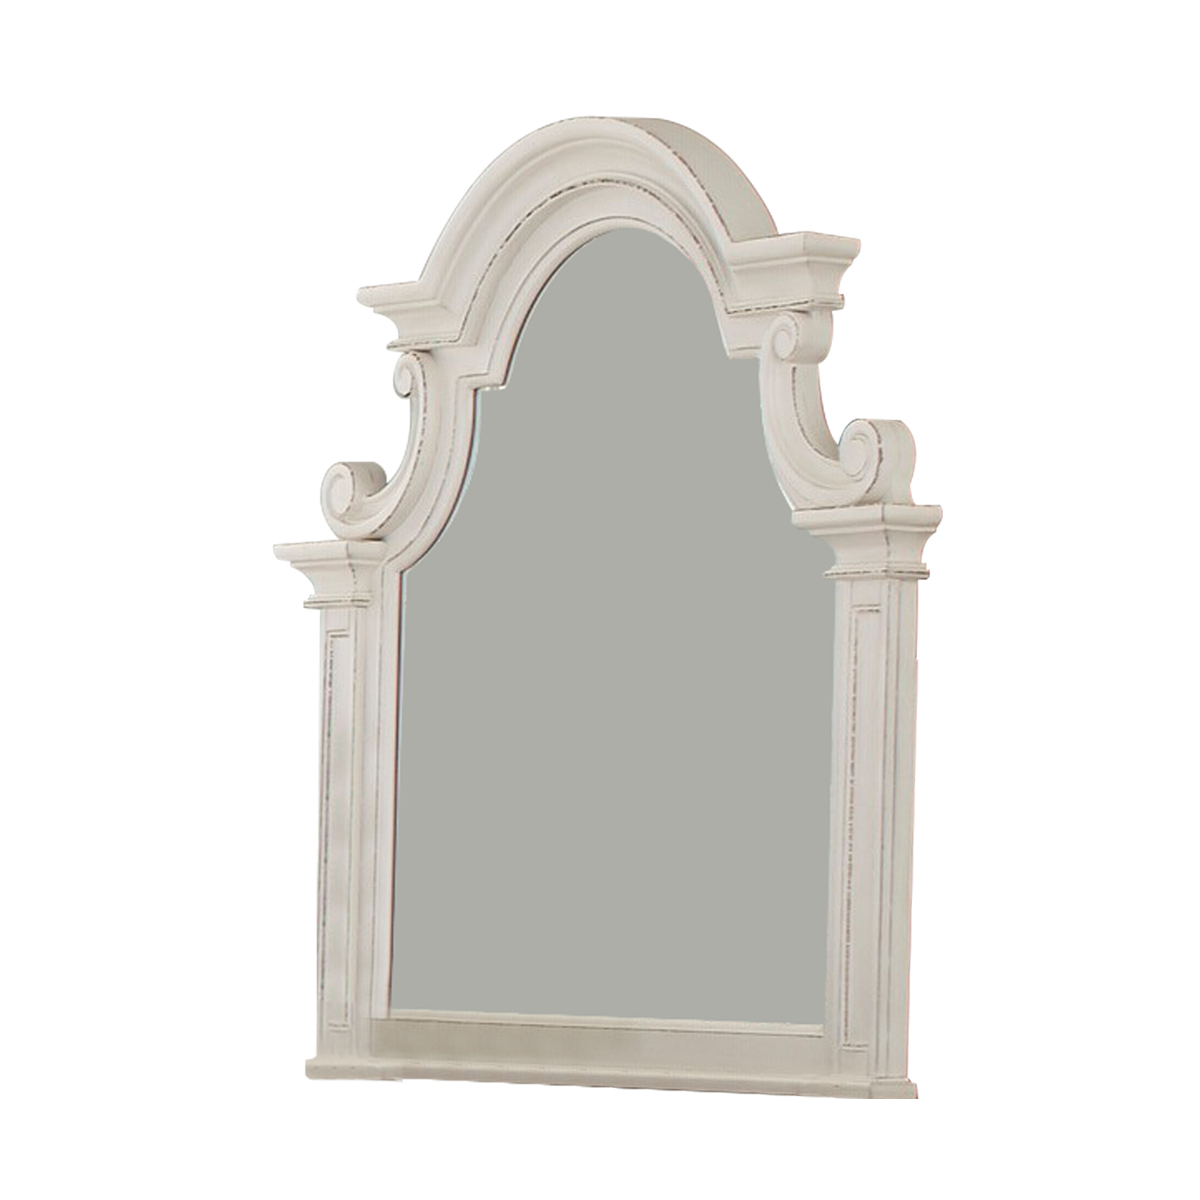 Scalloped Design Wooden Frame Mirror With Distressed Detail, White- Saltoro Sherpi